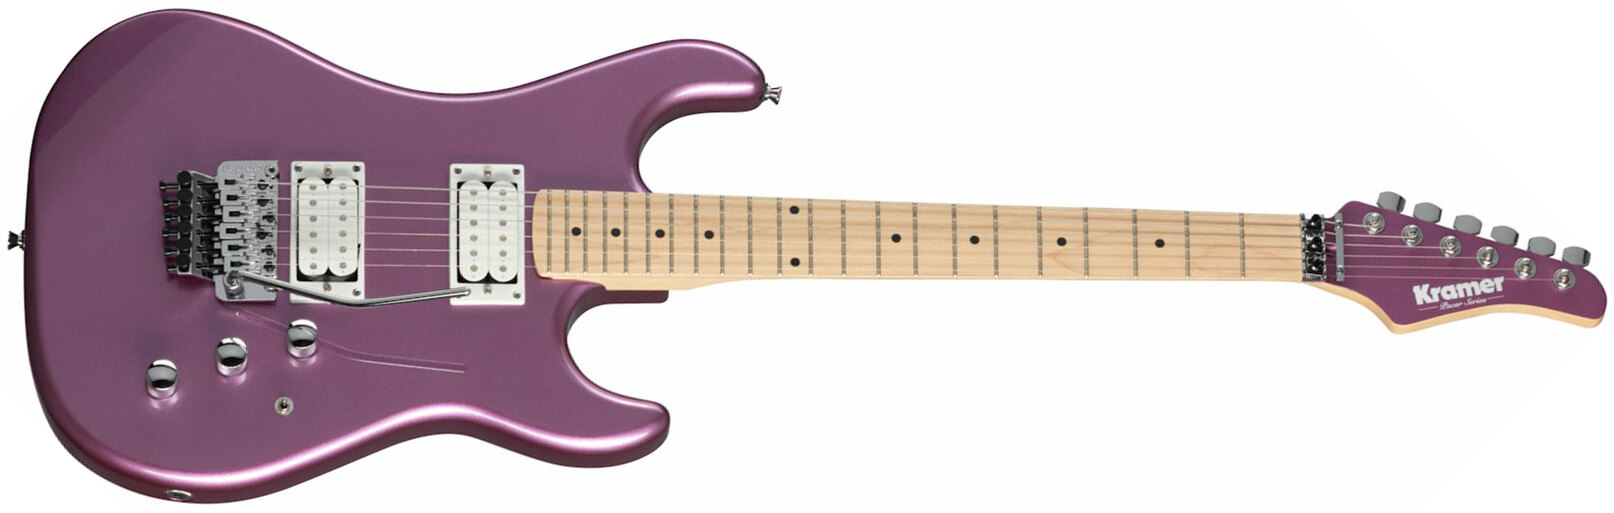 Kramer Pacer Classic 2h Fr Mn - Purple Passion Metallic - Str shape electric guitar - Main picture